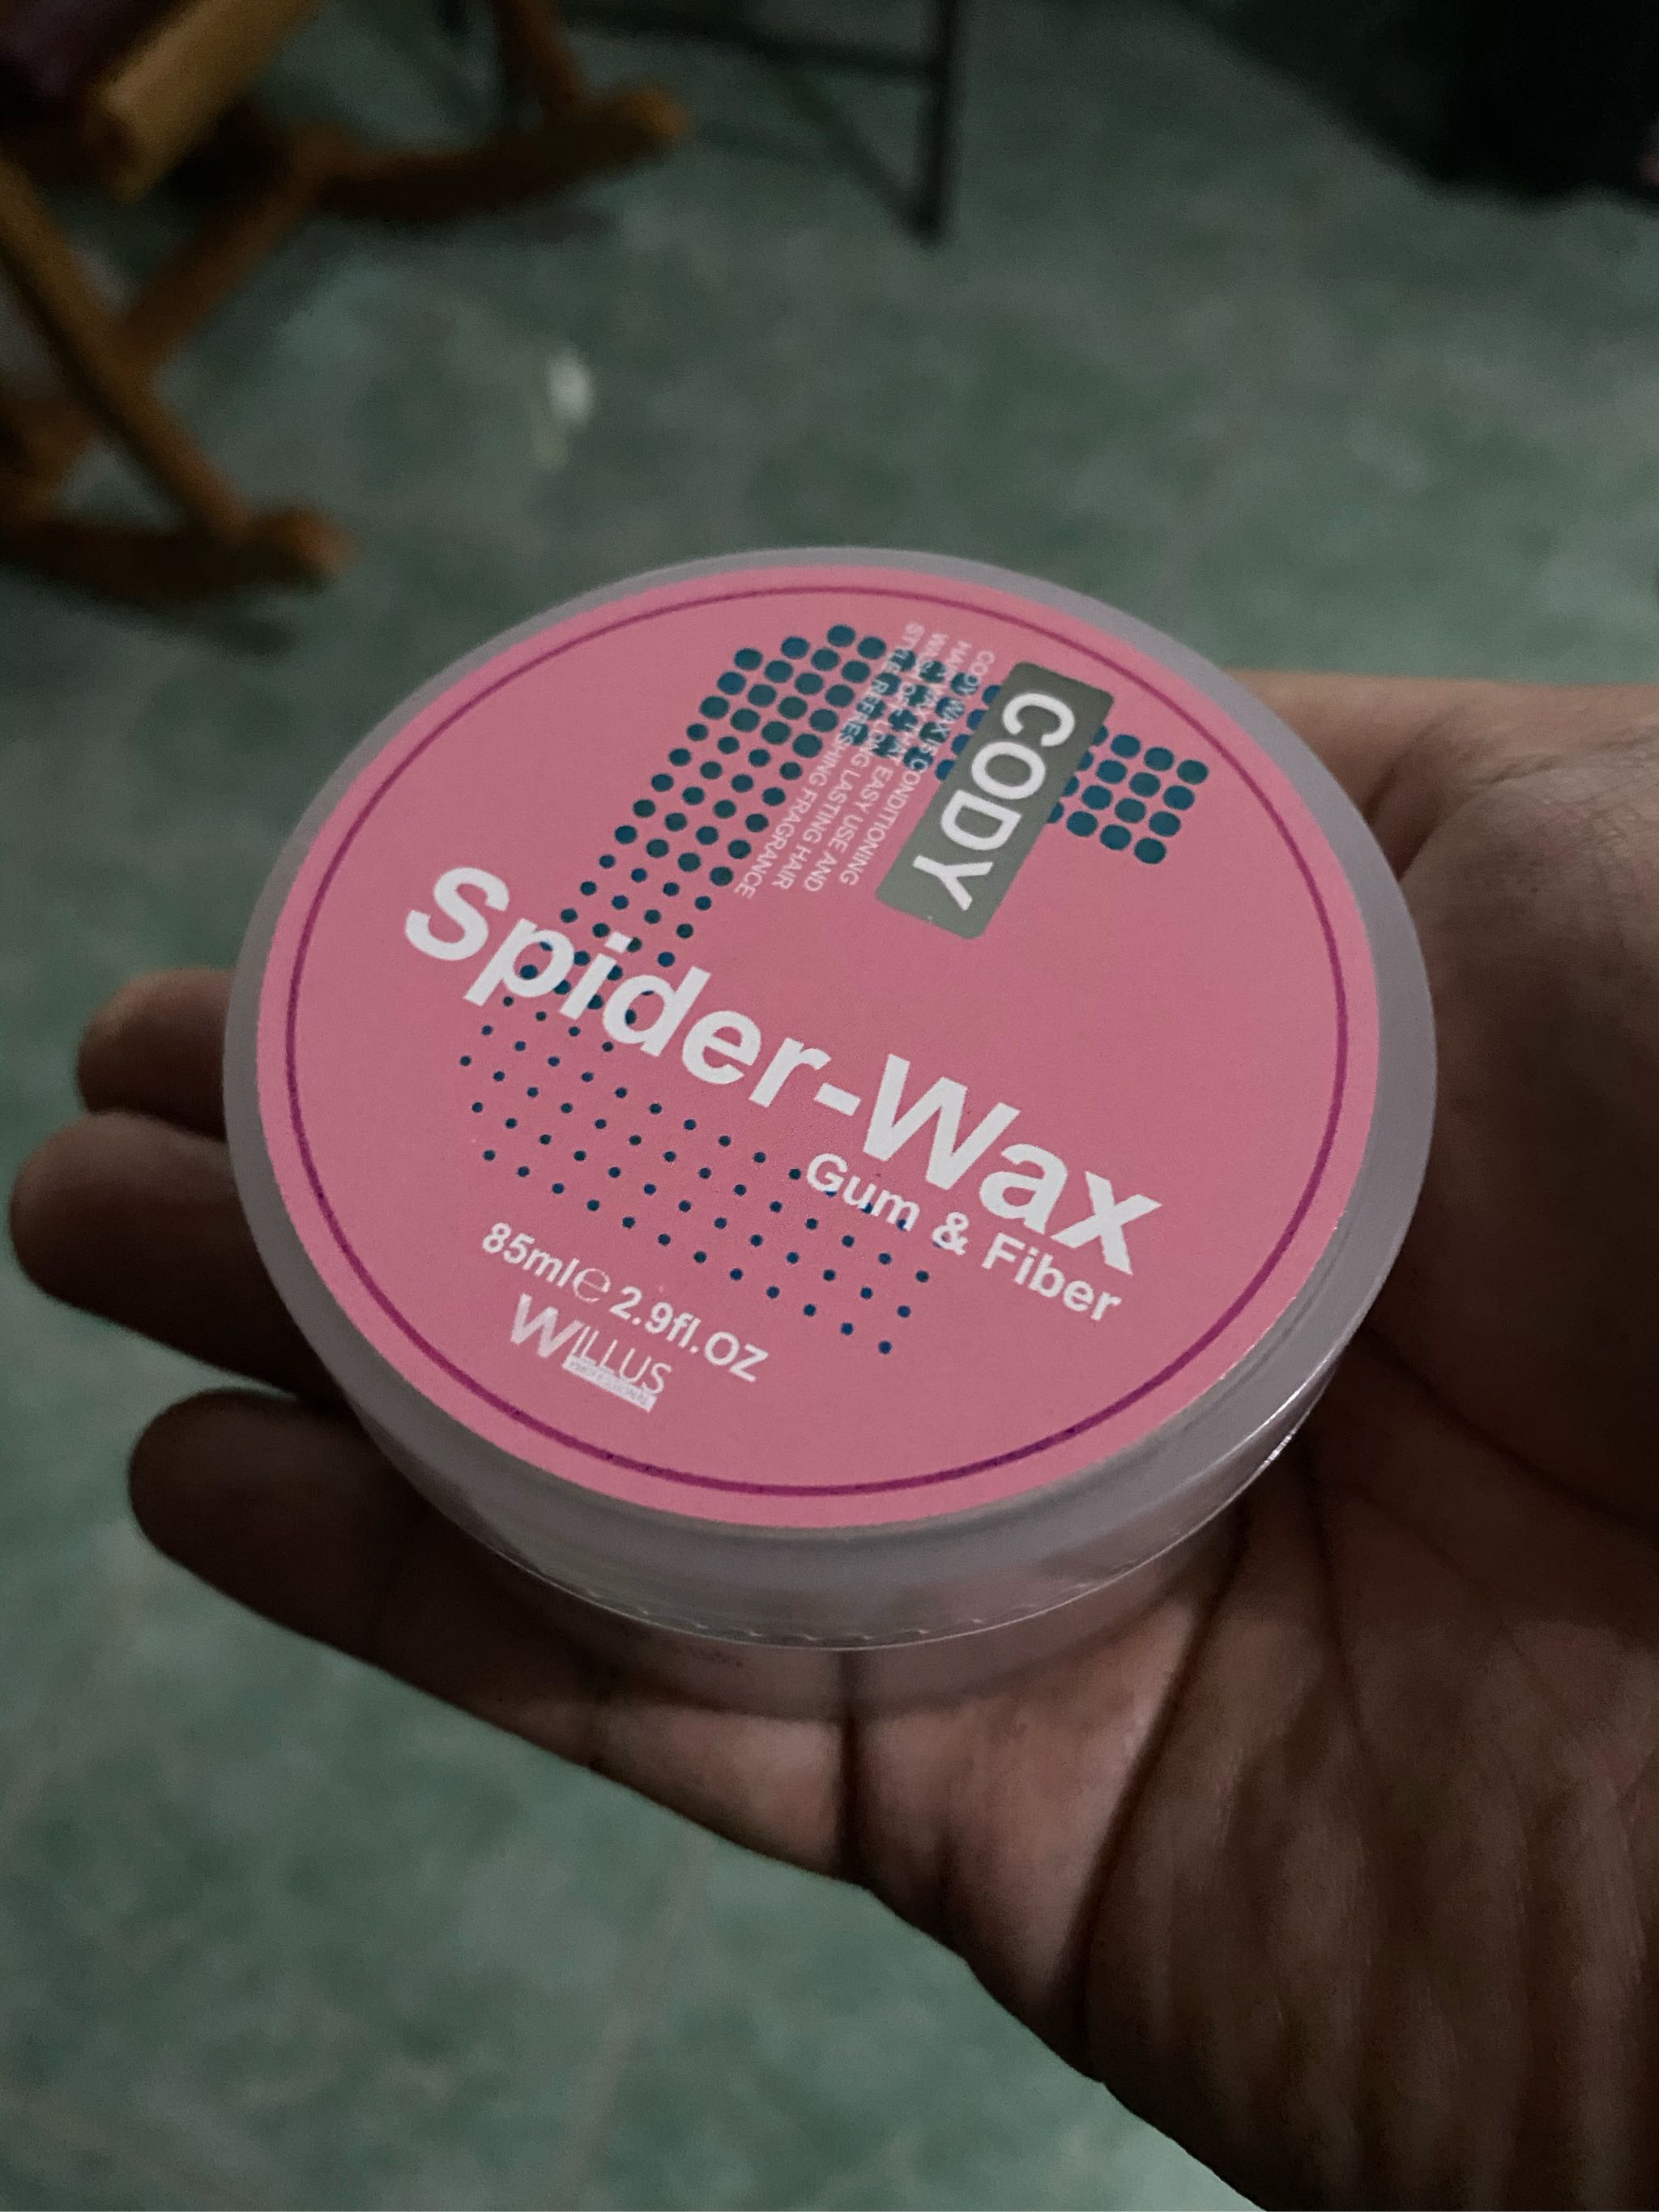 Spider Wax 01 175ml – Welcome to PersonalStuff